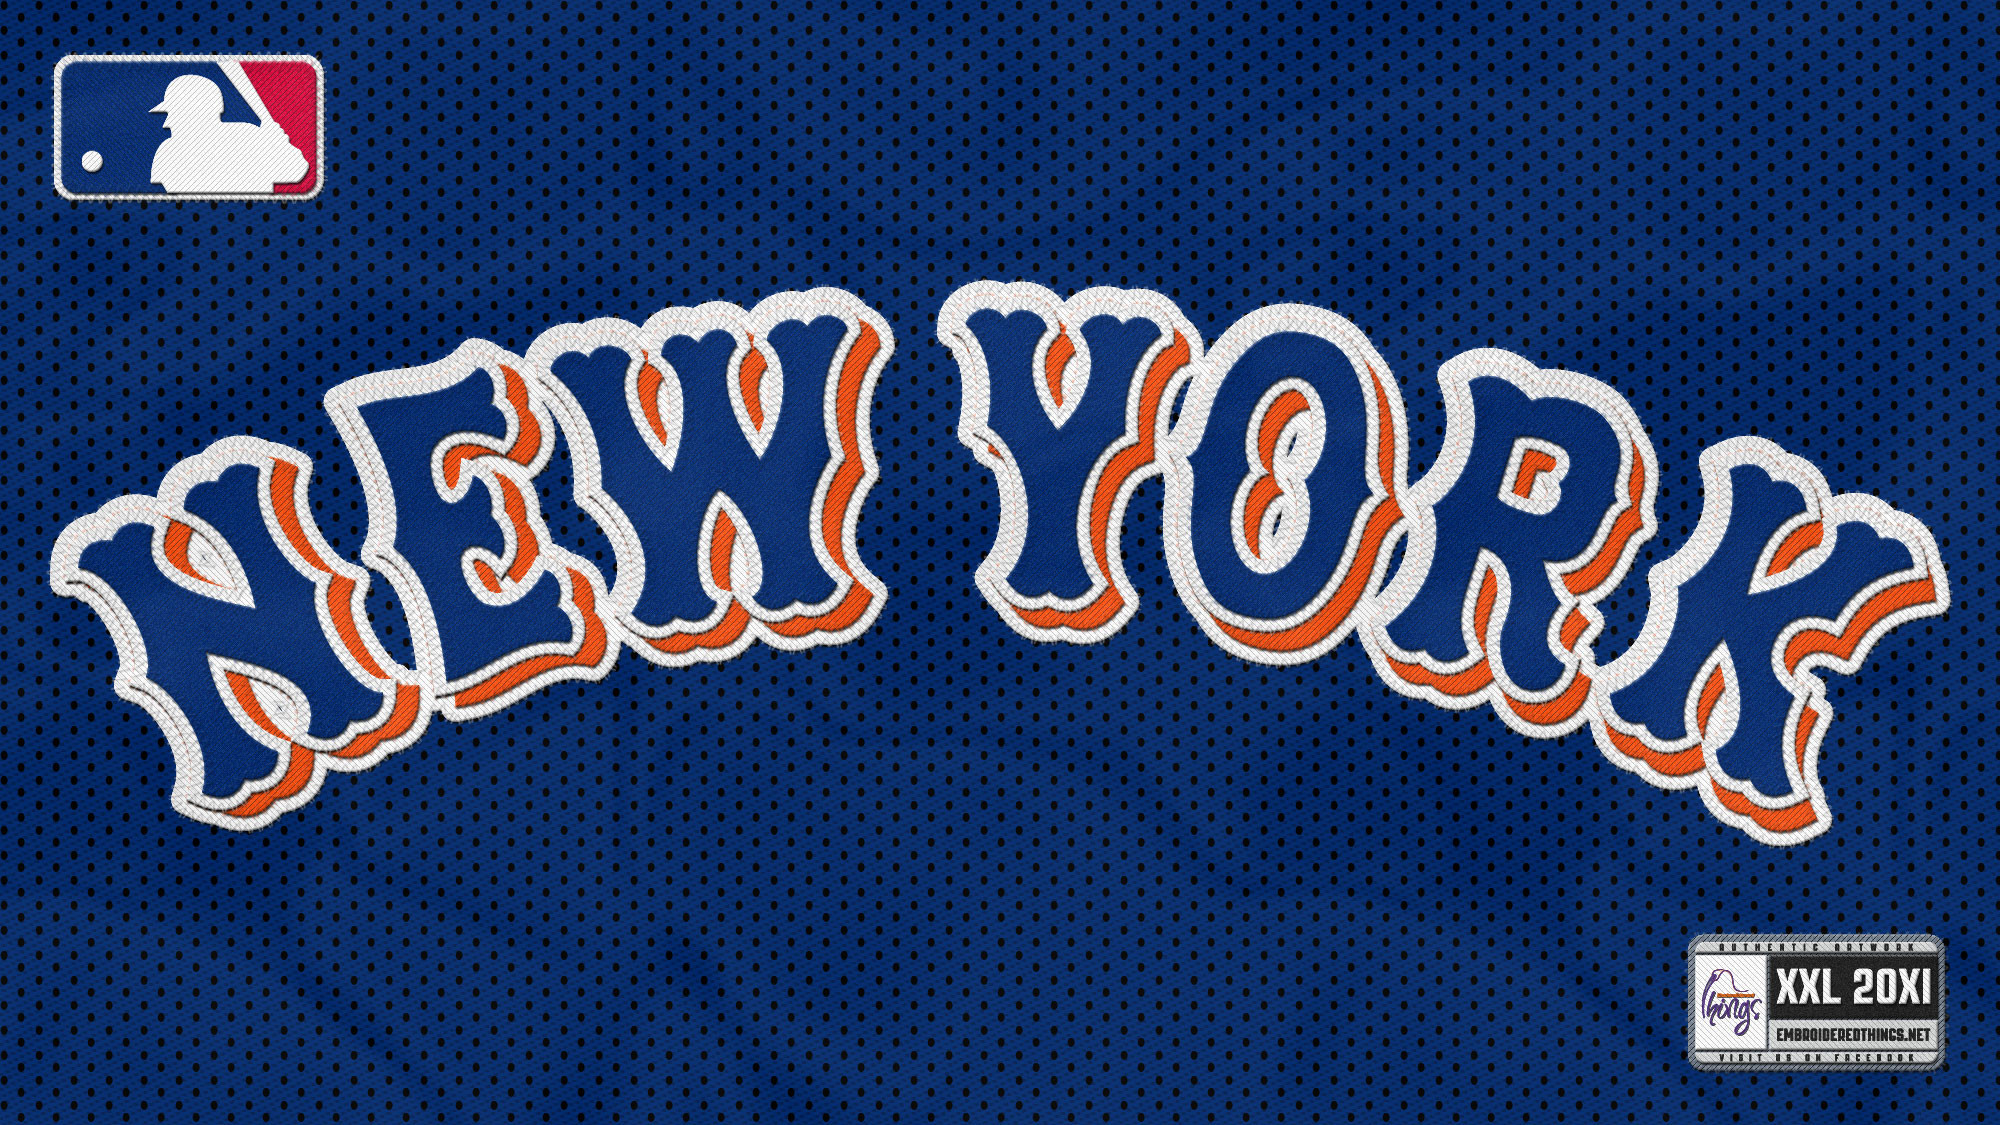 New York Mets  Happy OpeningDay 2021 LGM  Facebook